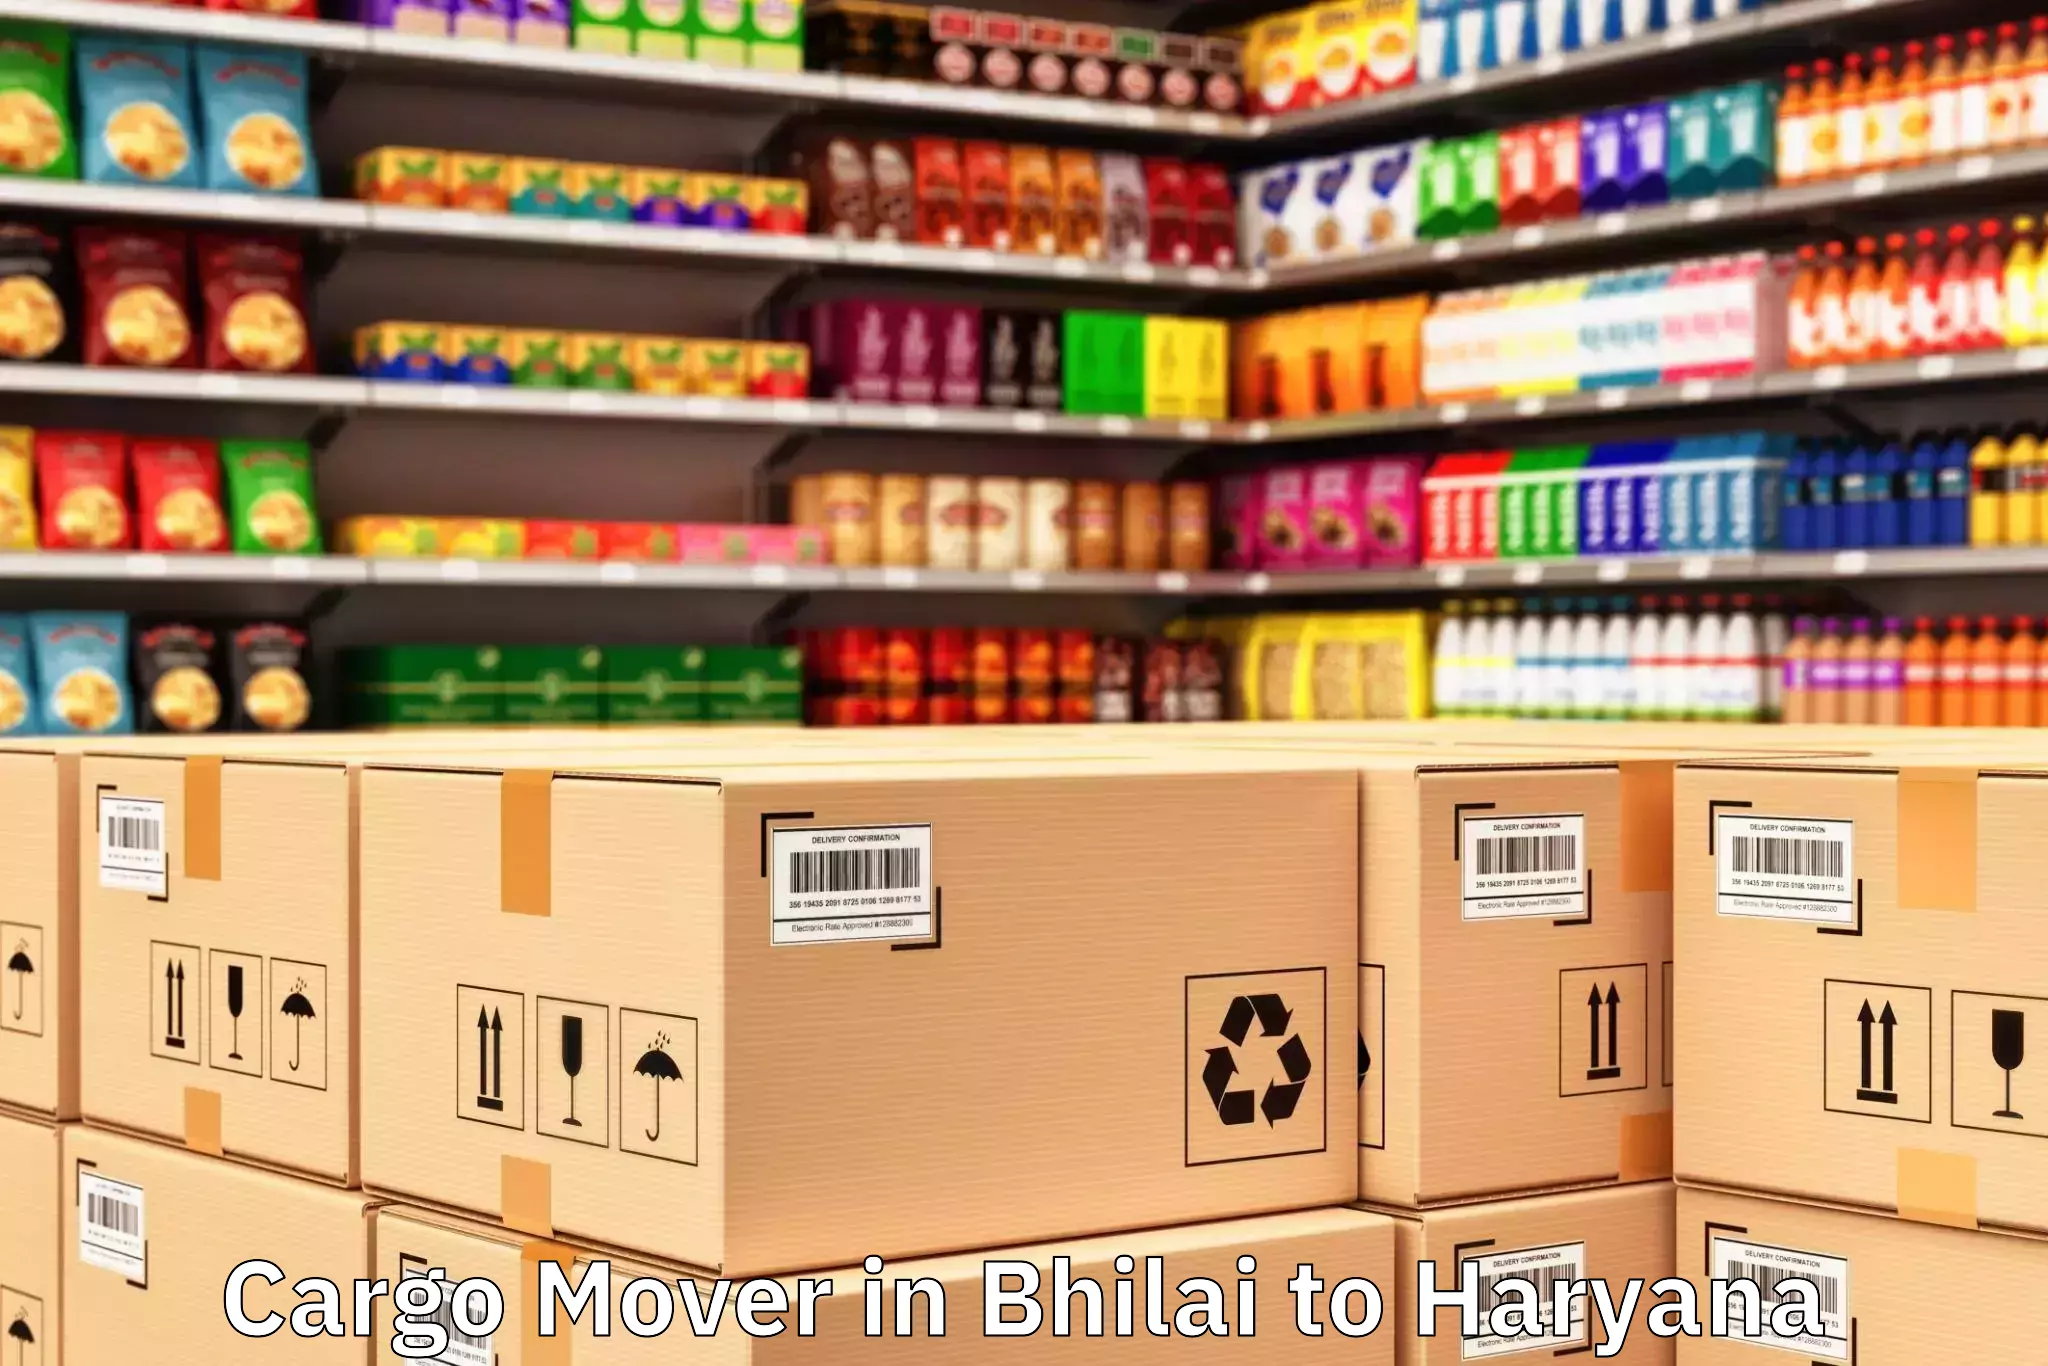 Hassle-Free Bhilai to Kharkhoda Cargo Mover